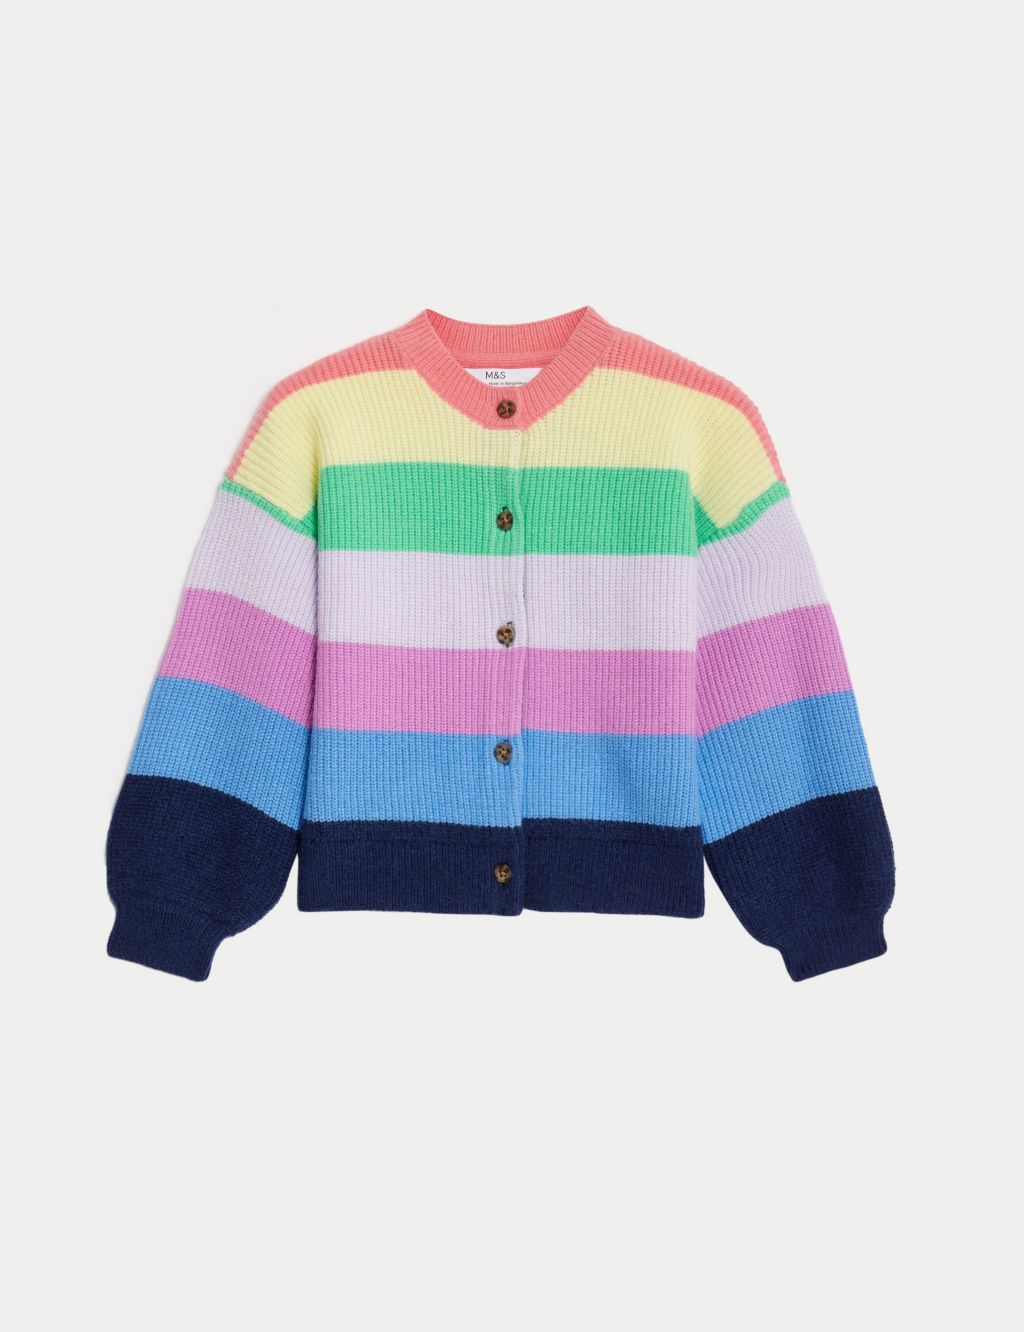 Rainbow Knitted Cardigan (2-8 Yrs) image 2